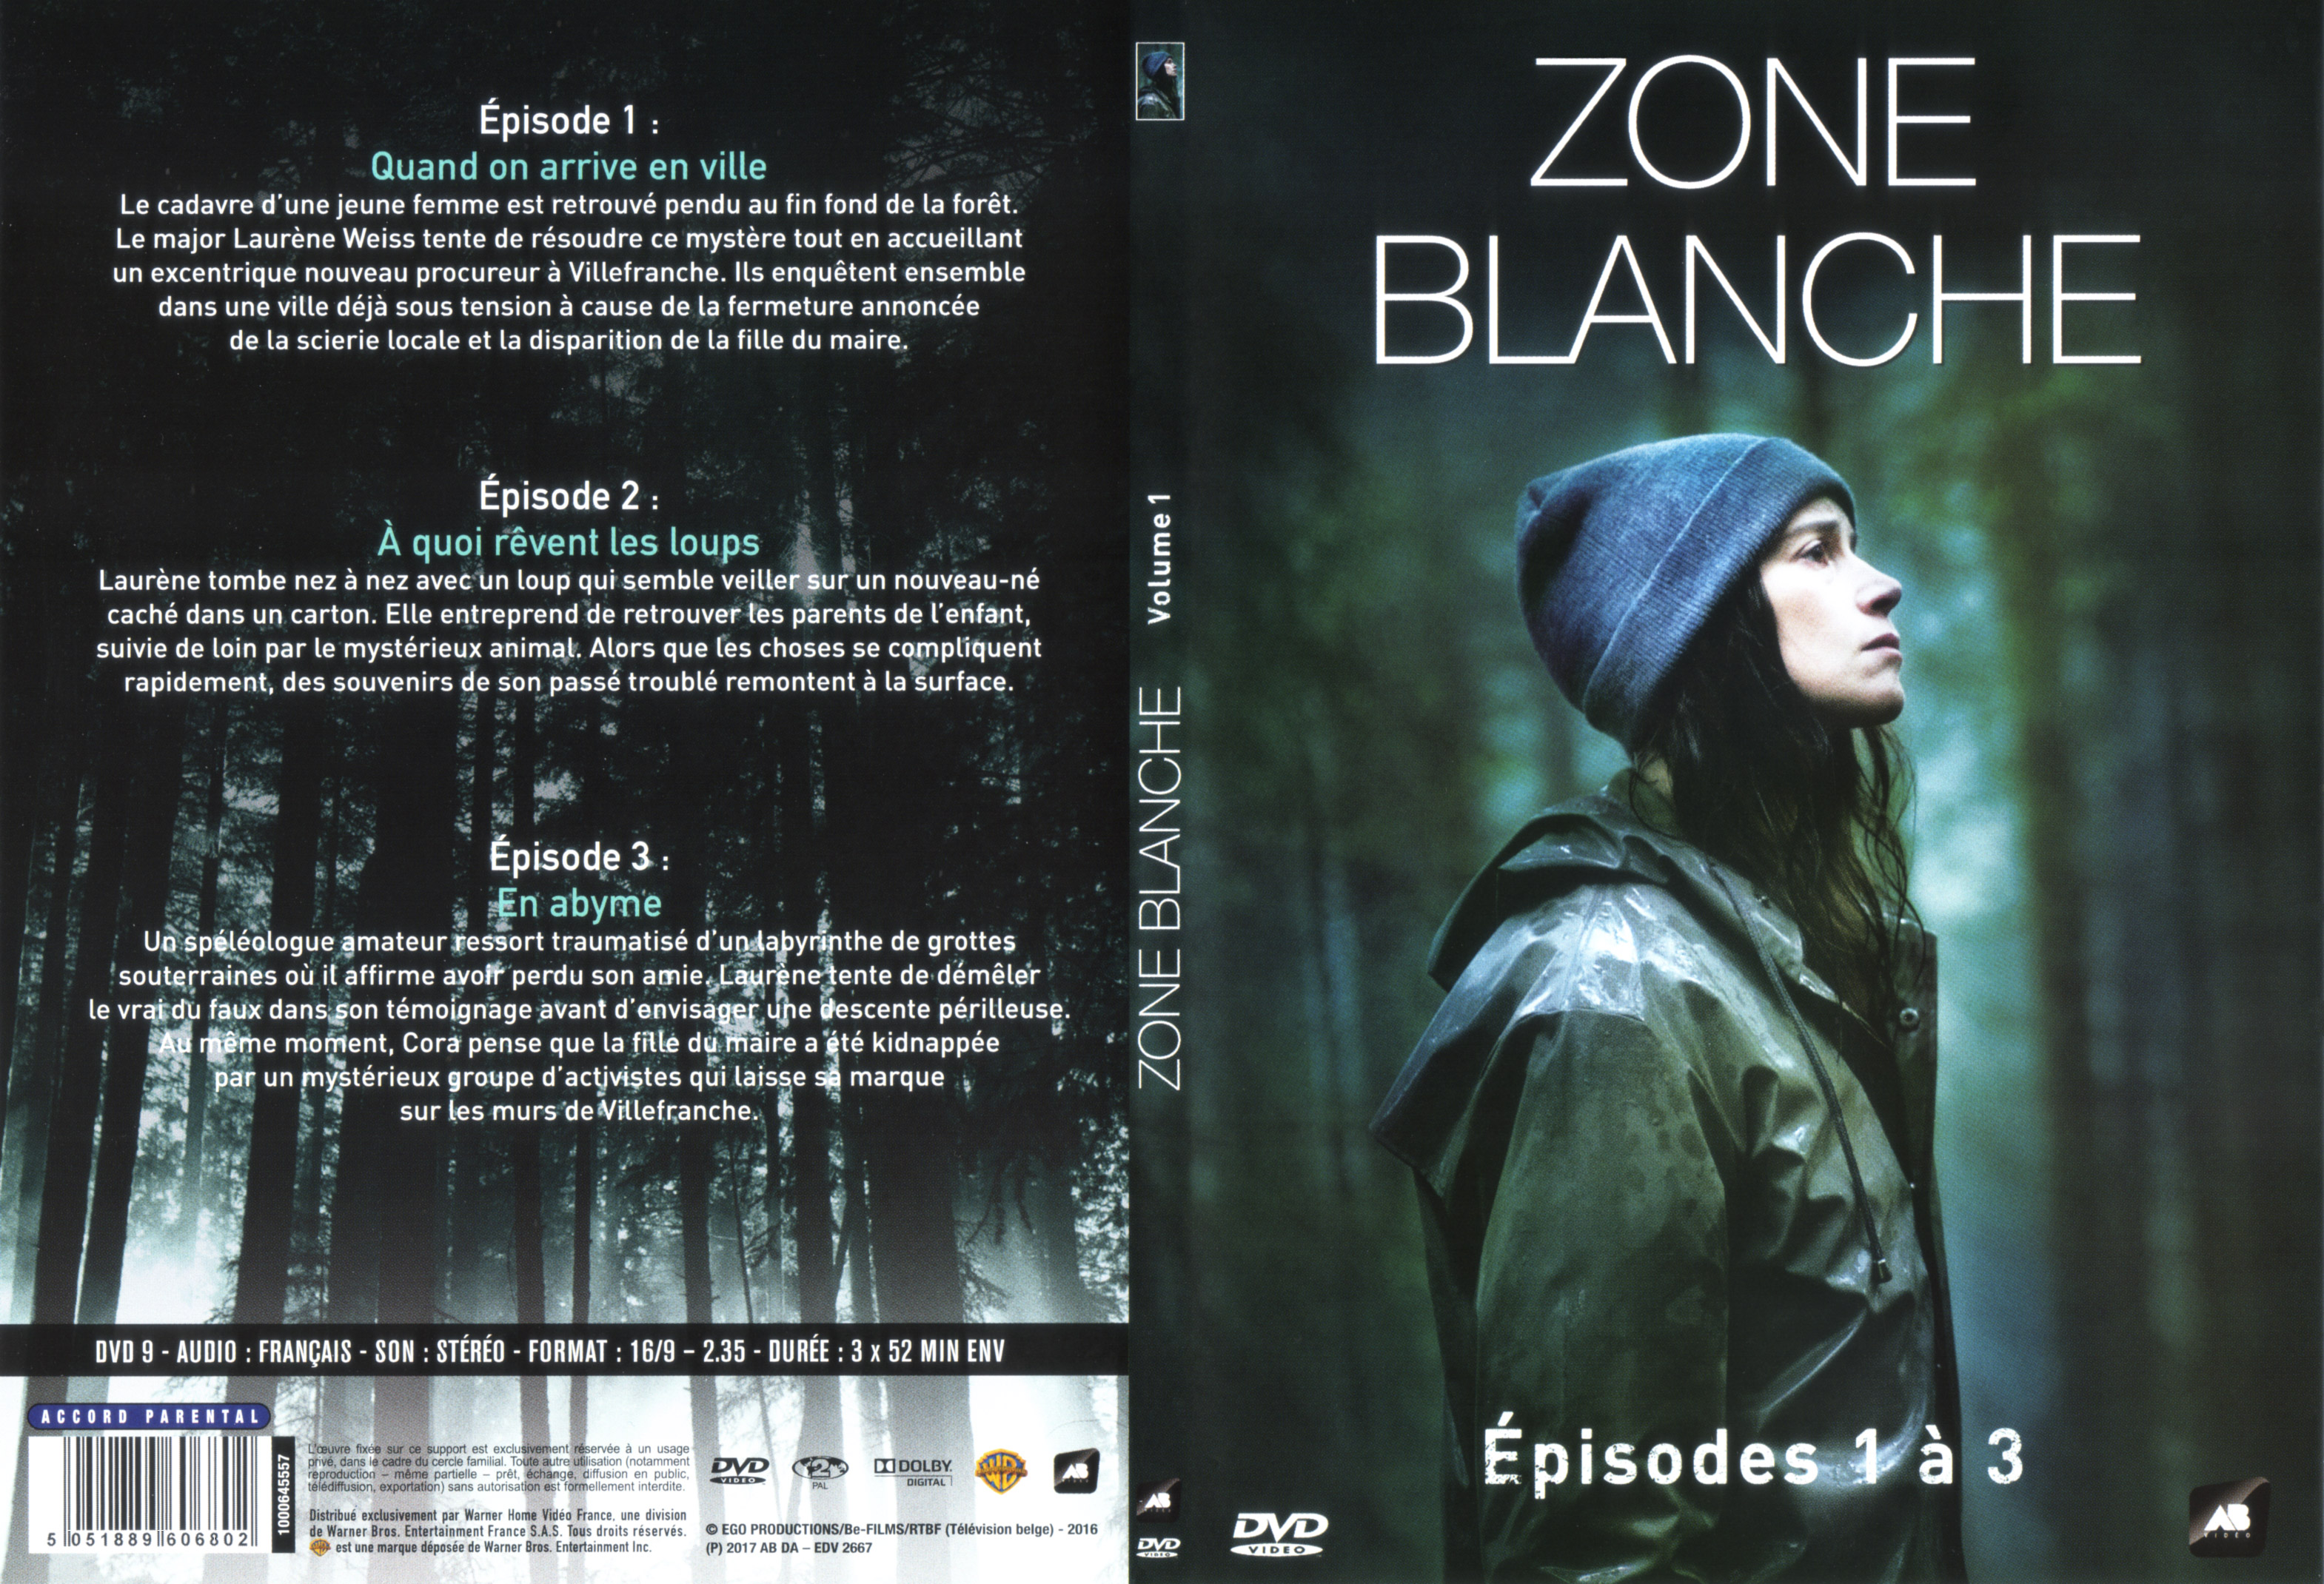 Jaquette DVD Zone blanche pisode 1-3